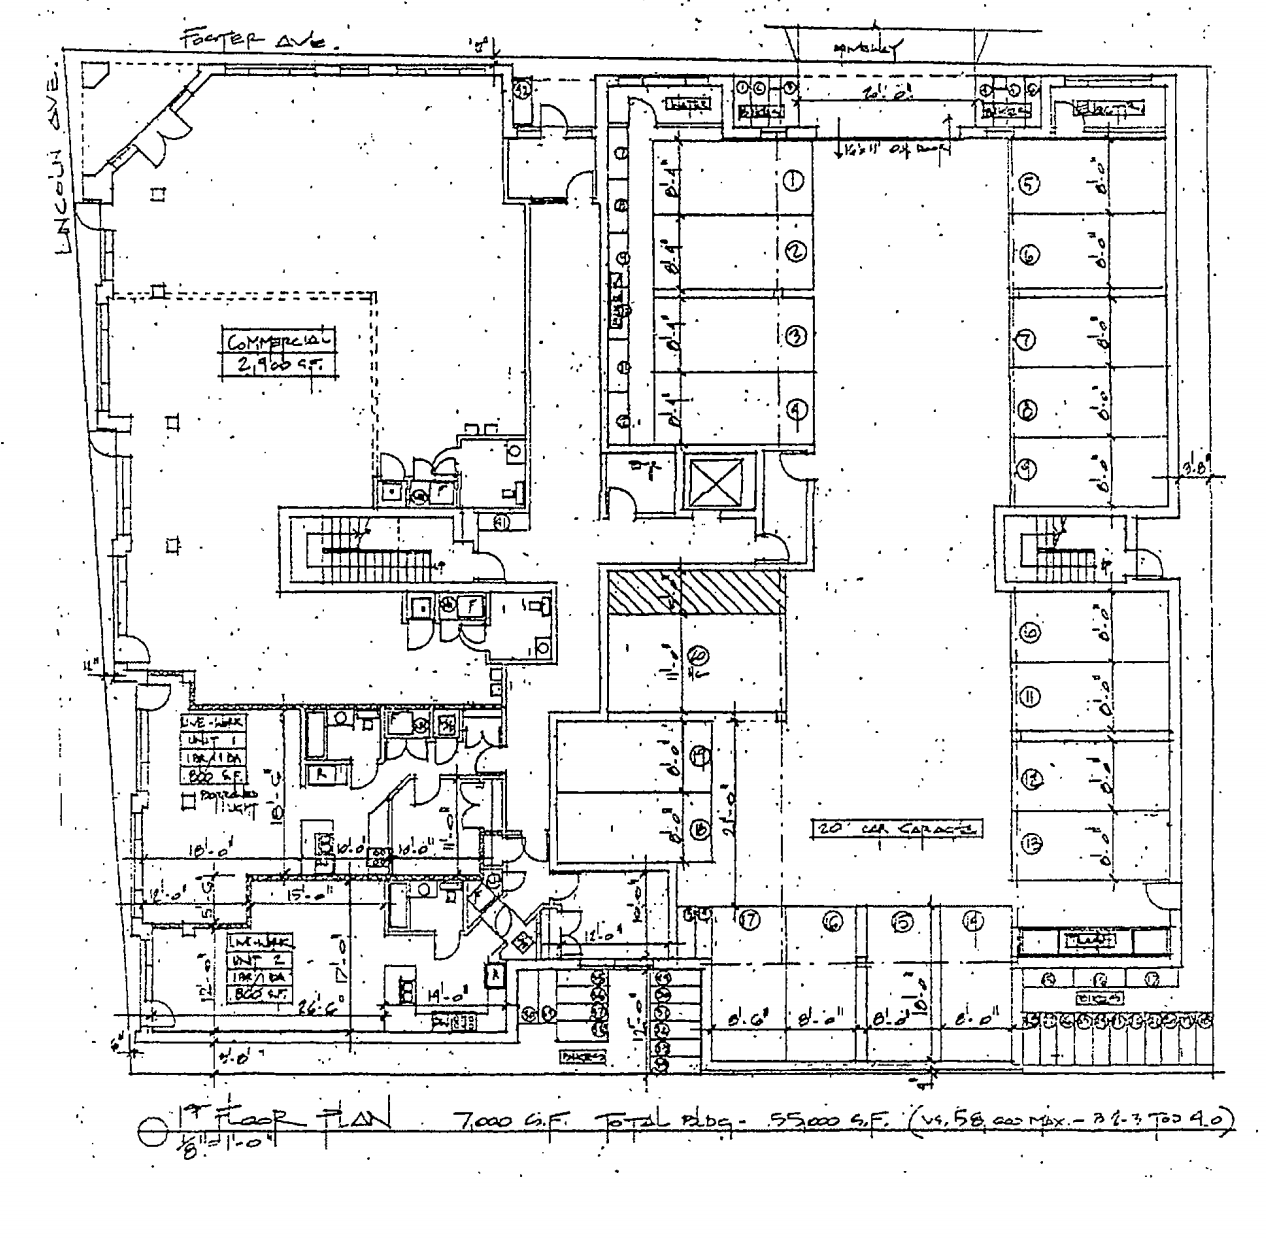 2465-79 W Foster Avenue first floor plan